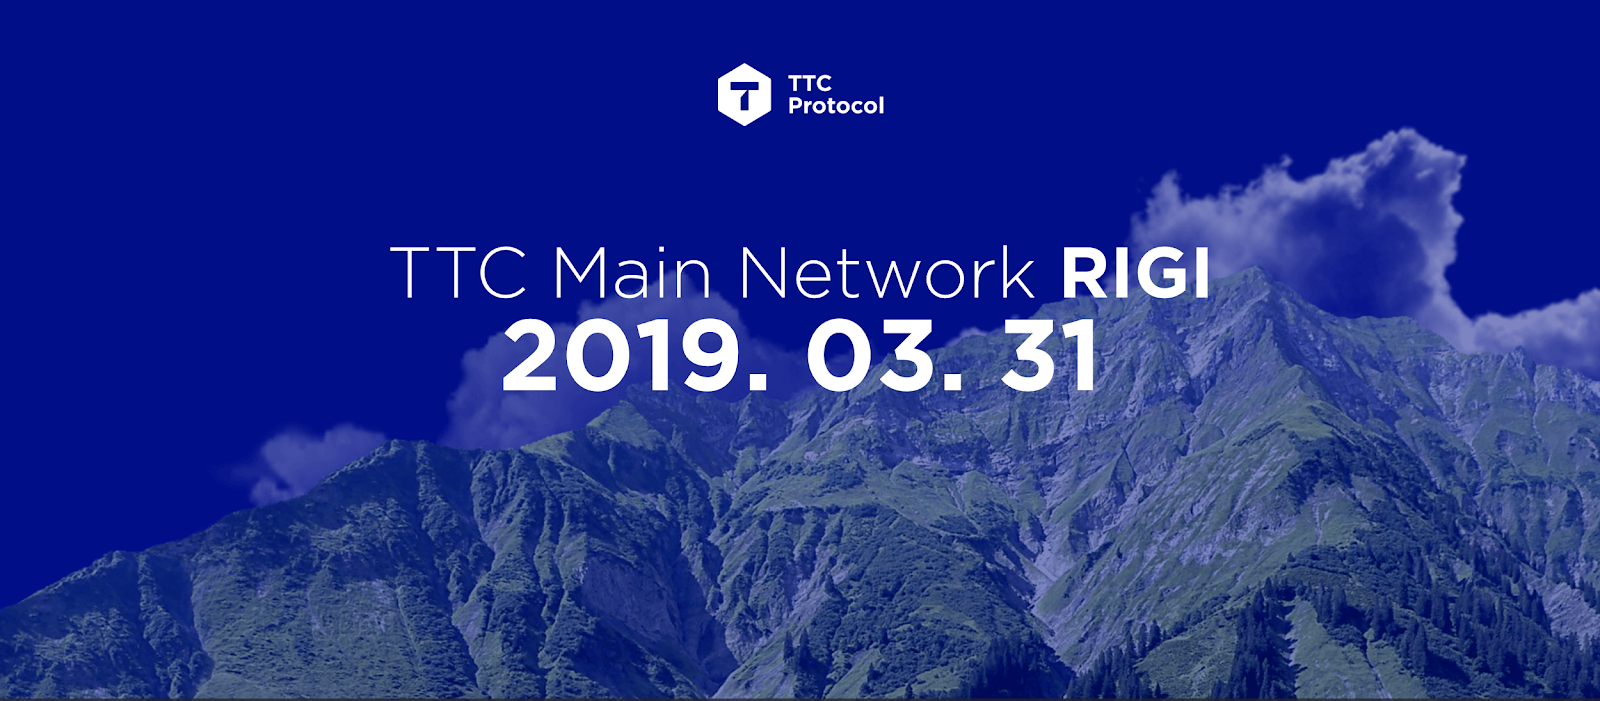 TTC Protocol, Thursday, March 21, 2019, Press release picture